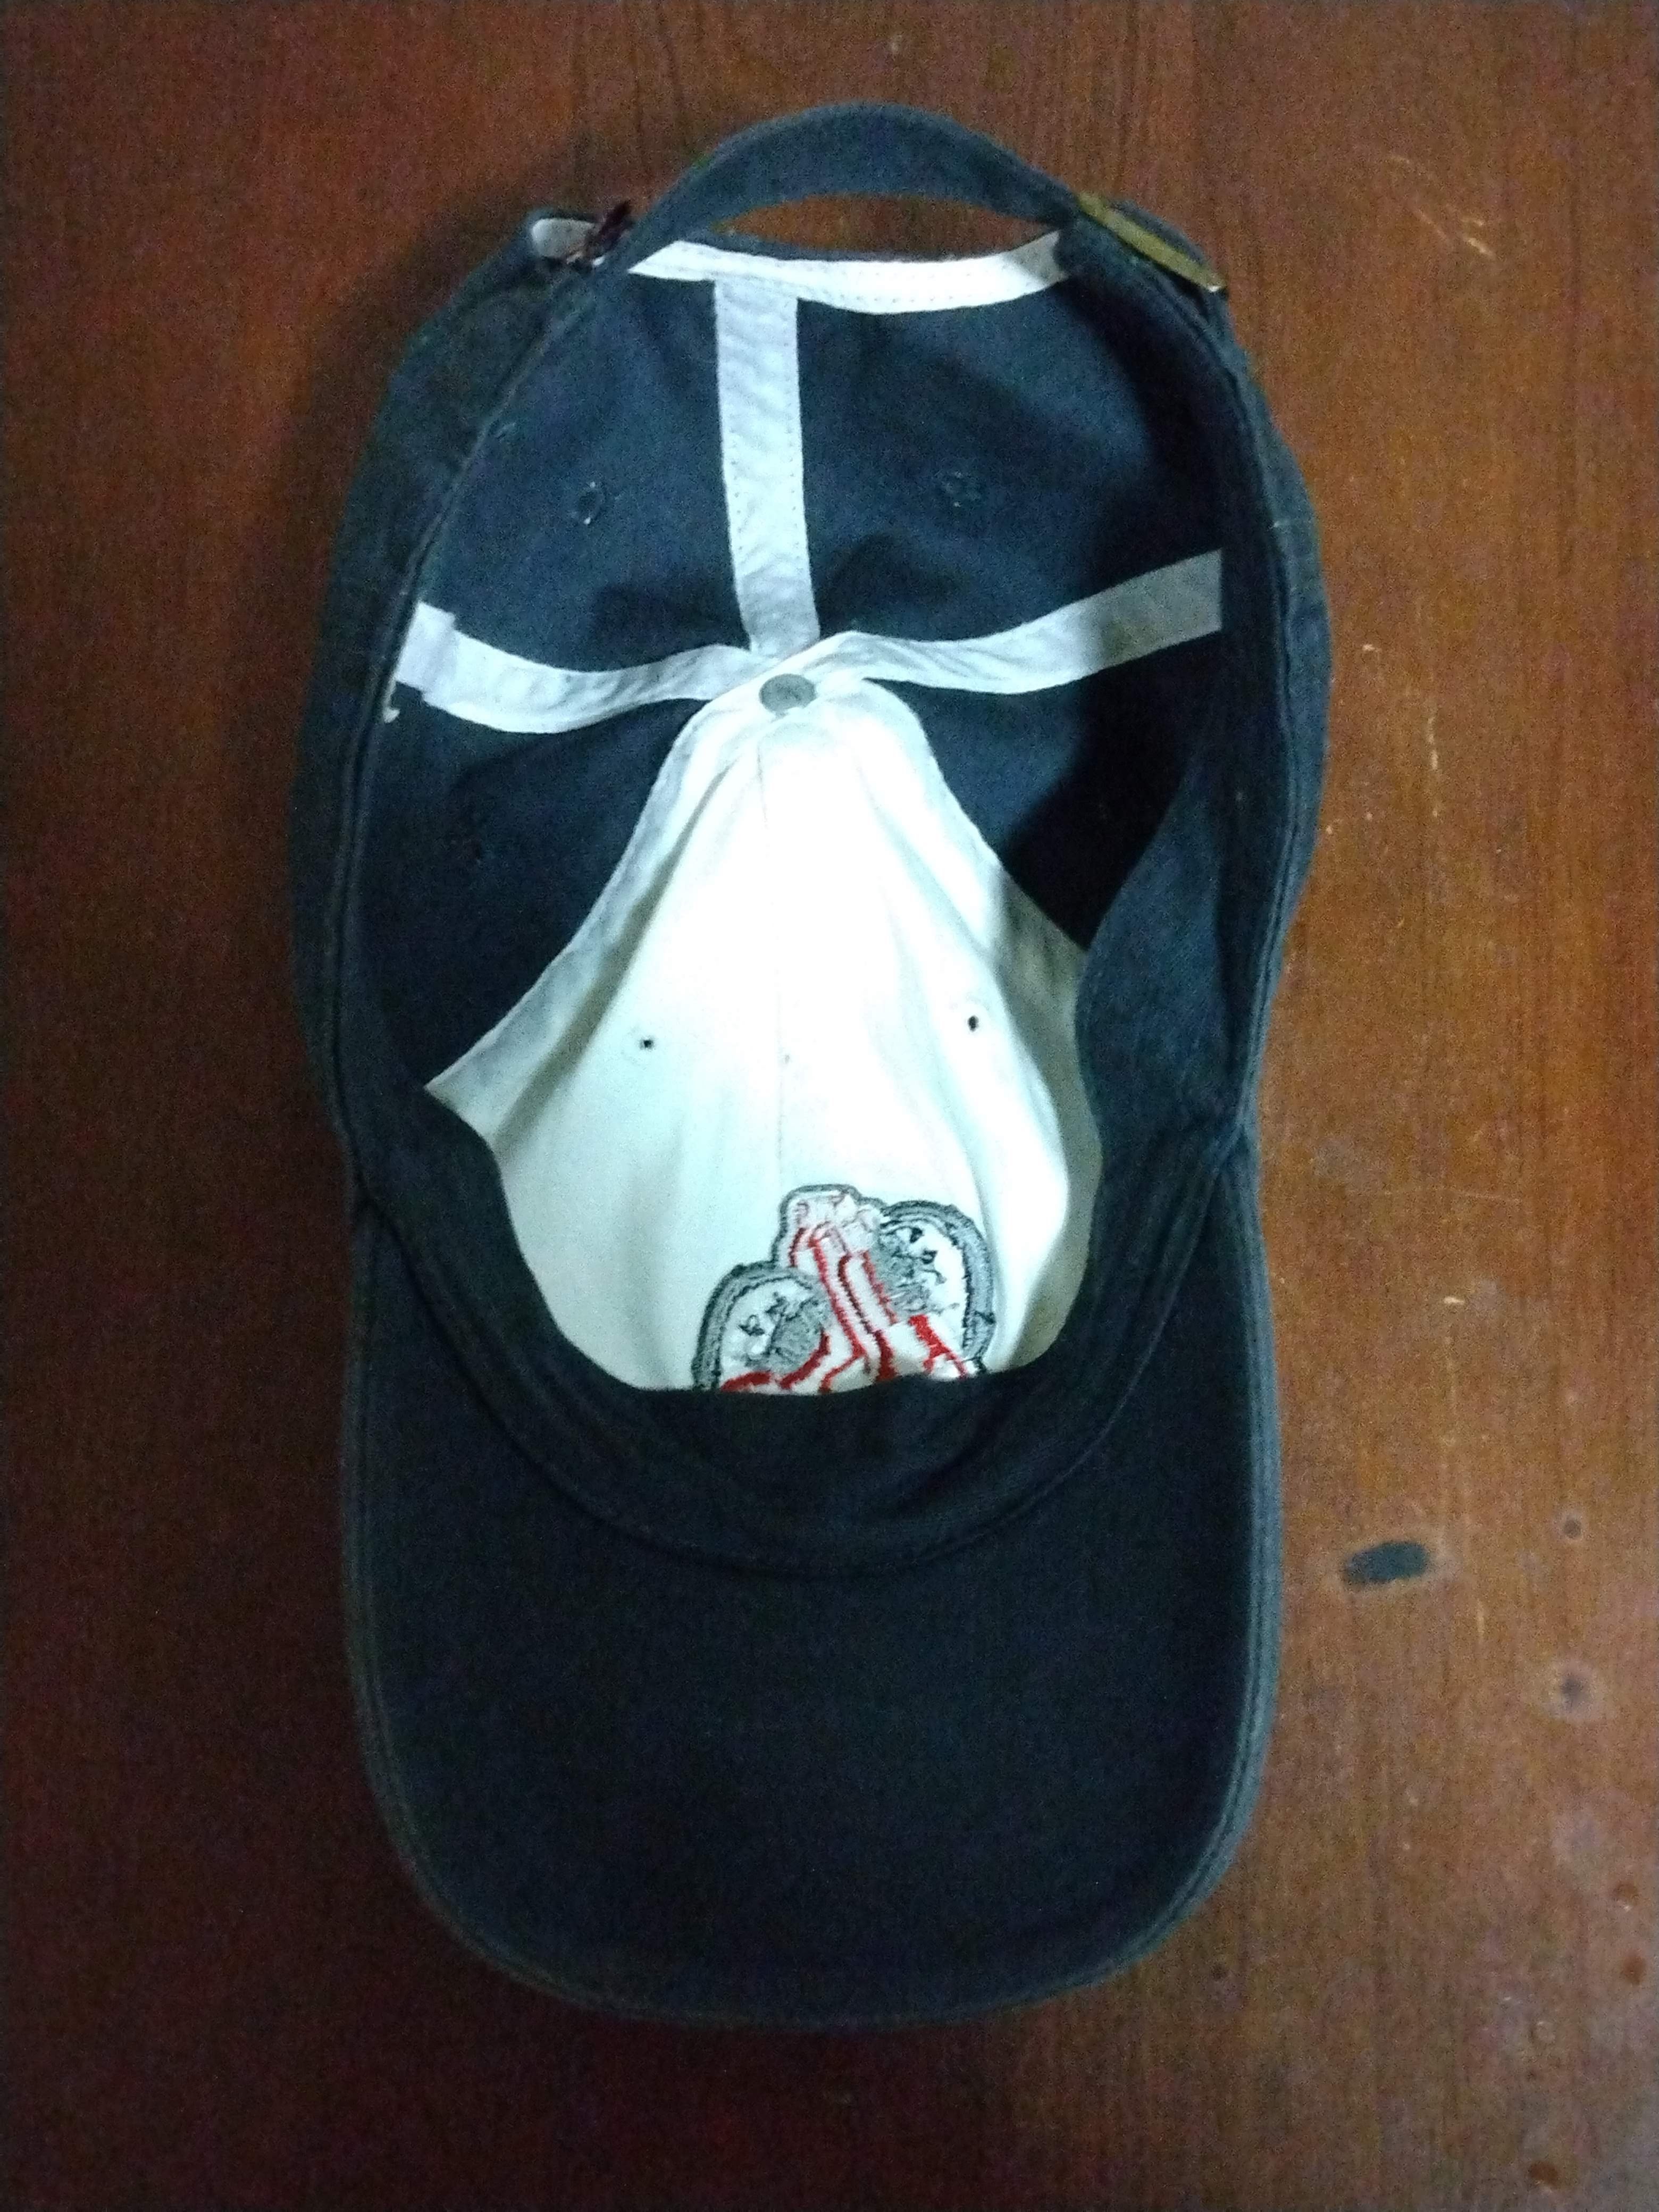 Pawtucket Red Sox RETRO MiLB '47 Brand Adj Hat